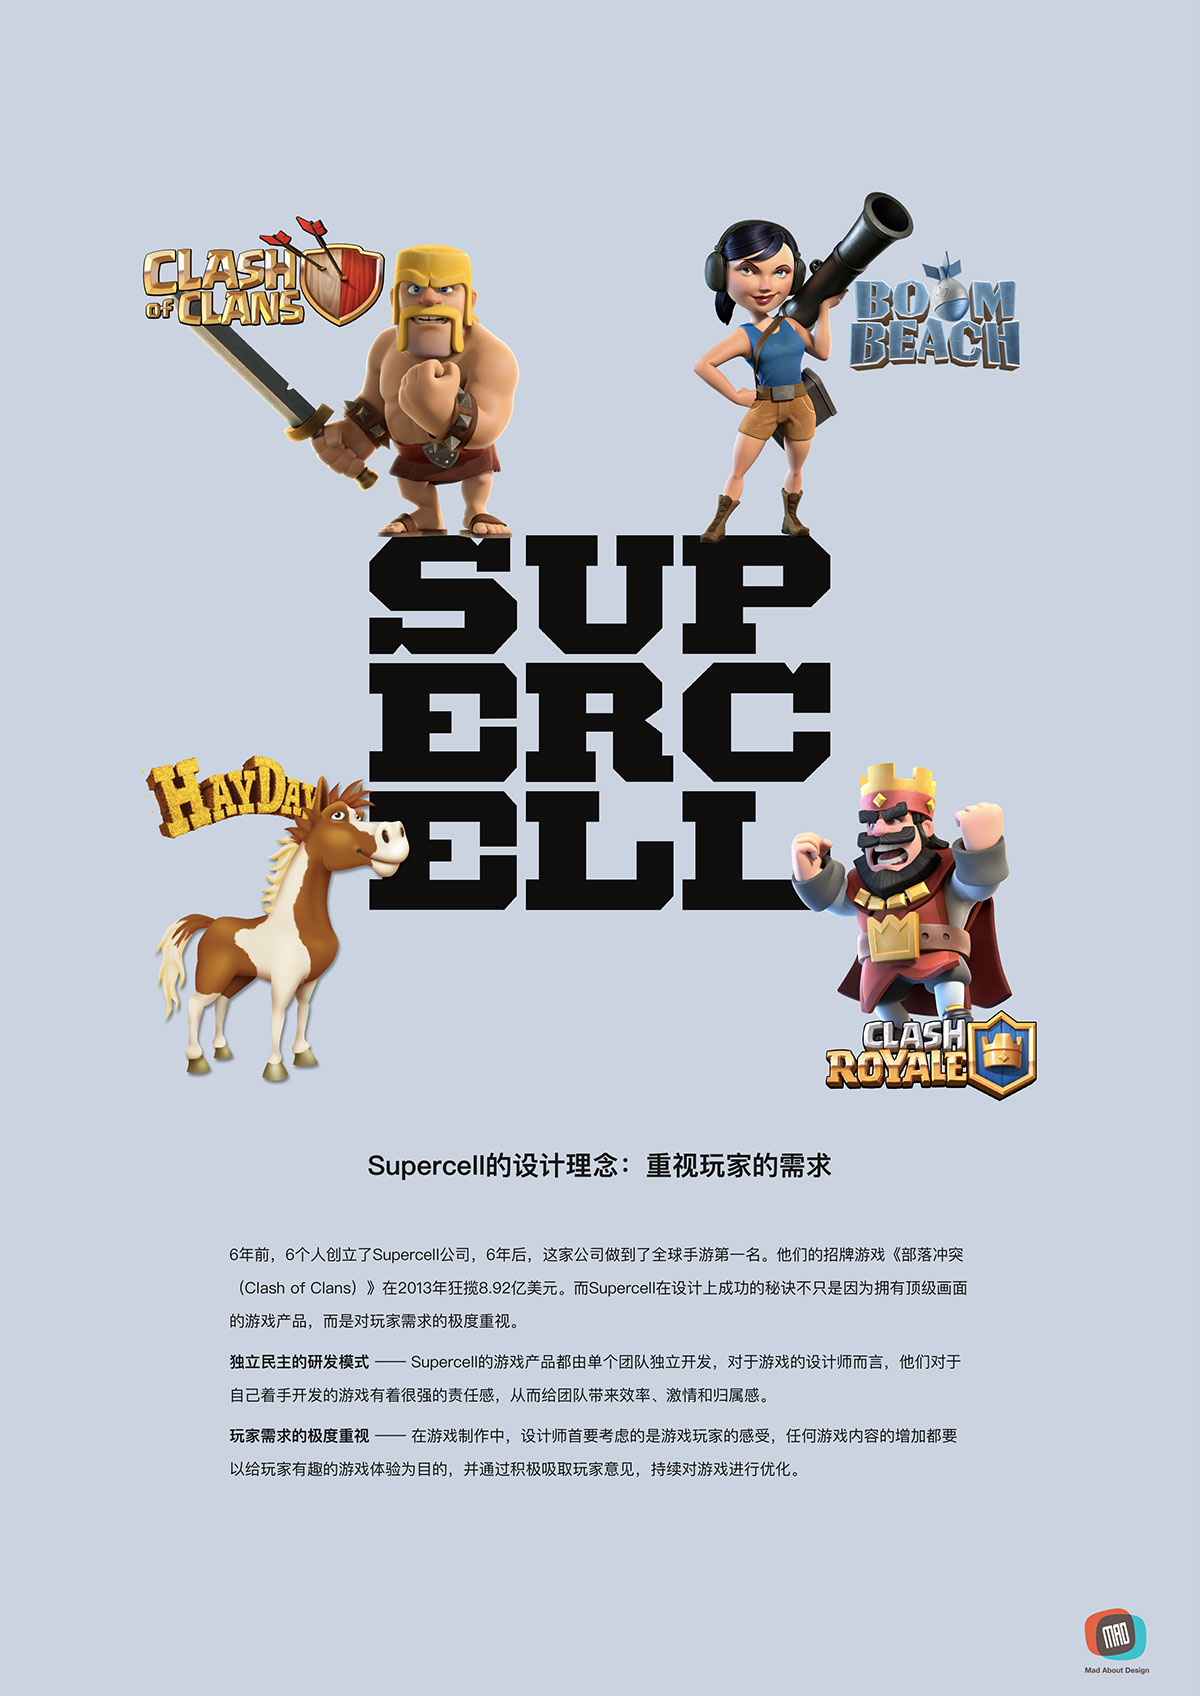 supercell design poster